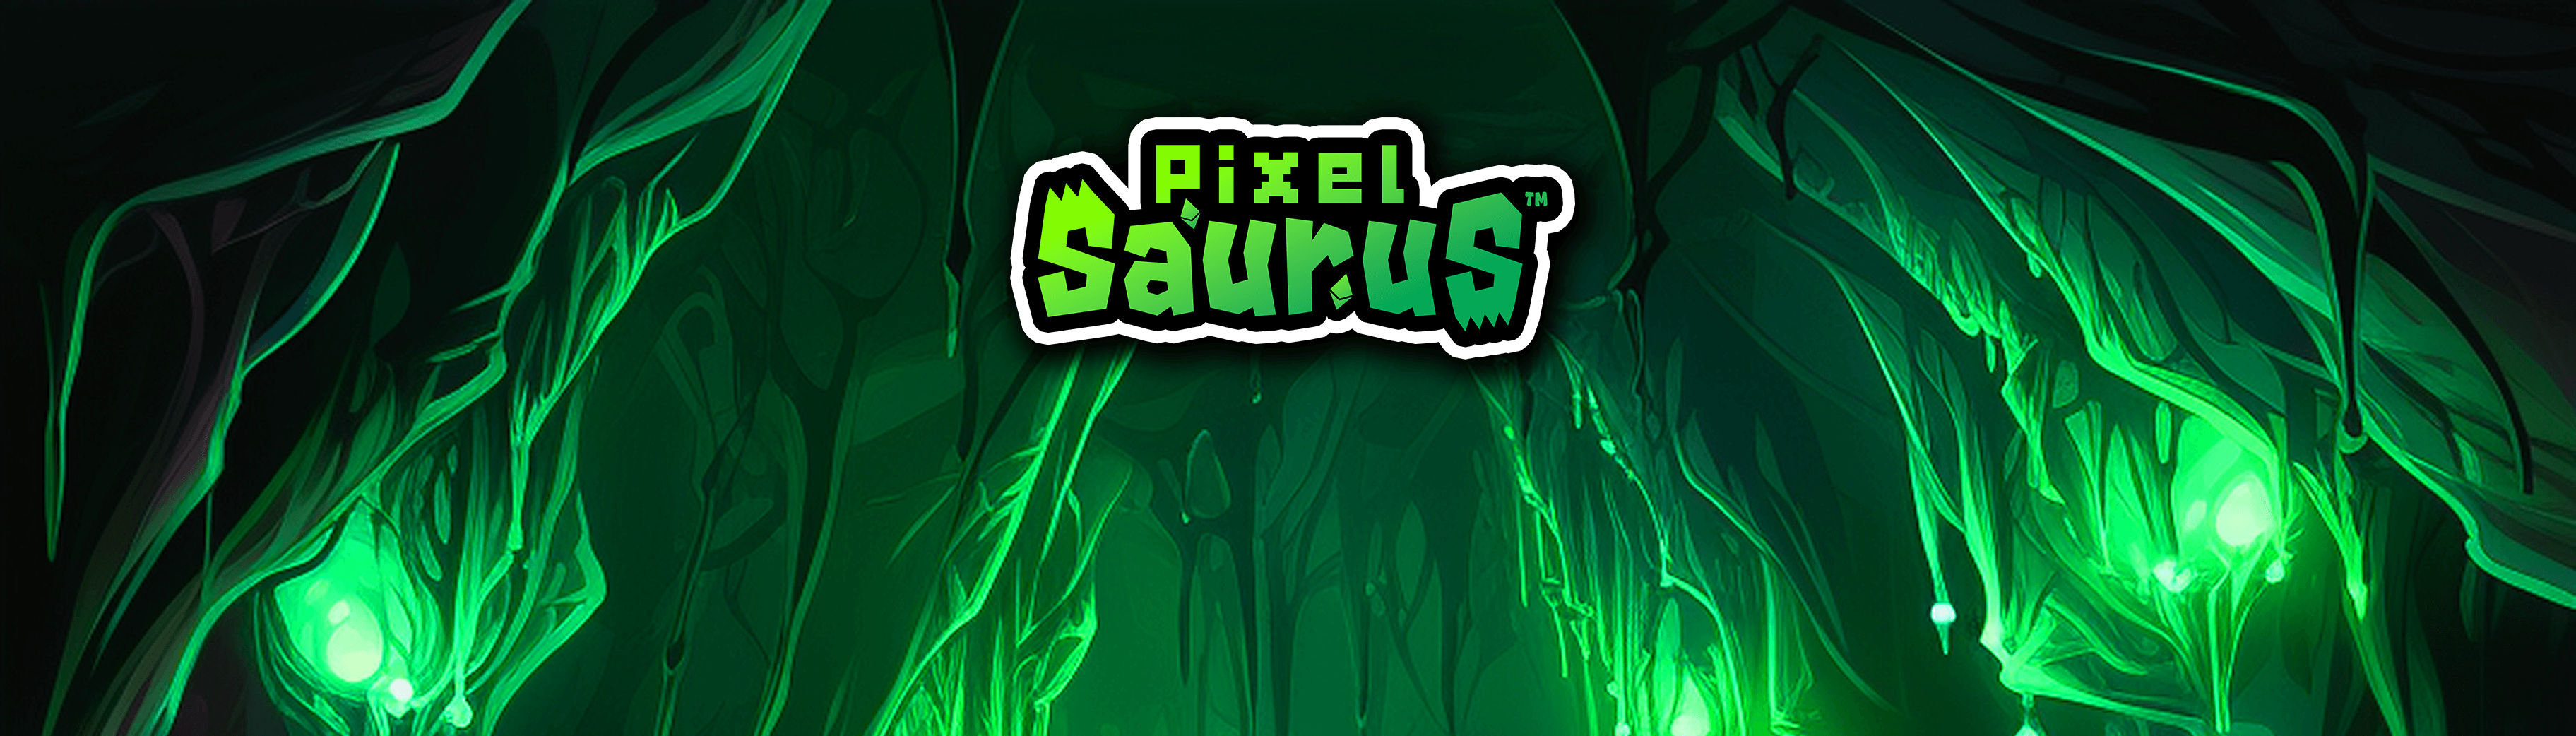 PixelSaurus banner